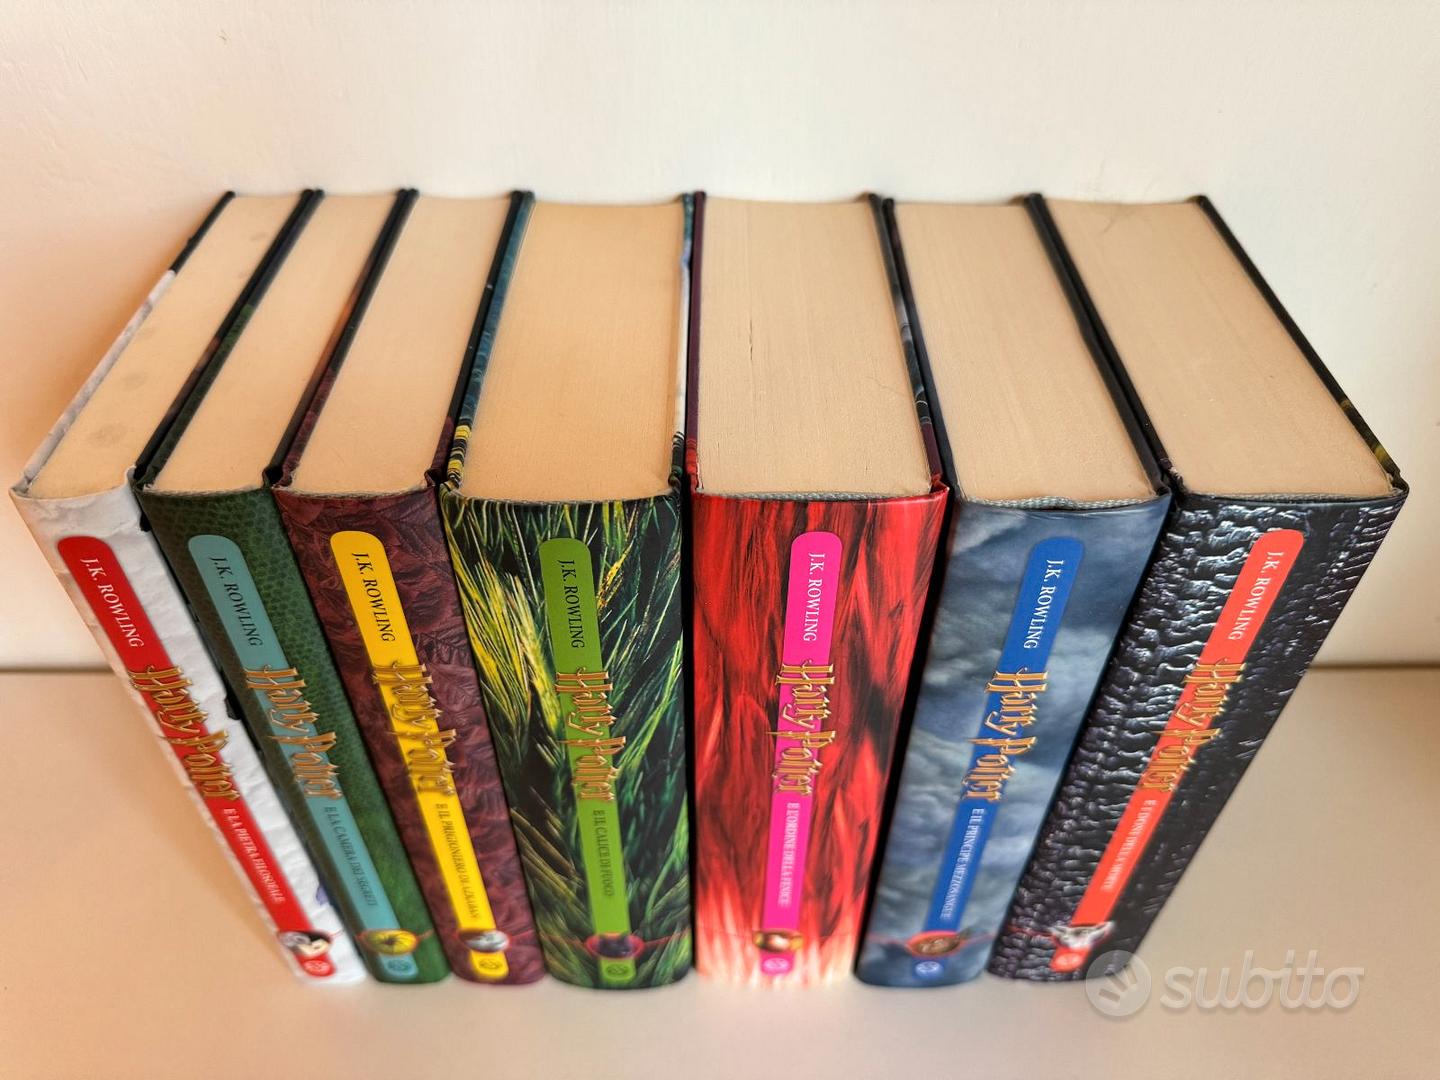 Harry Potter 2014 cofanetto ien van laanen - Libri e Riviste In